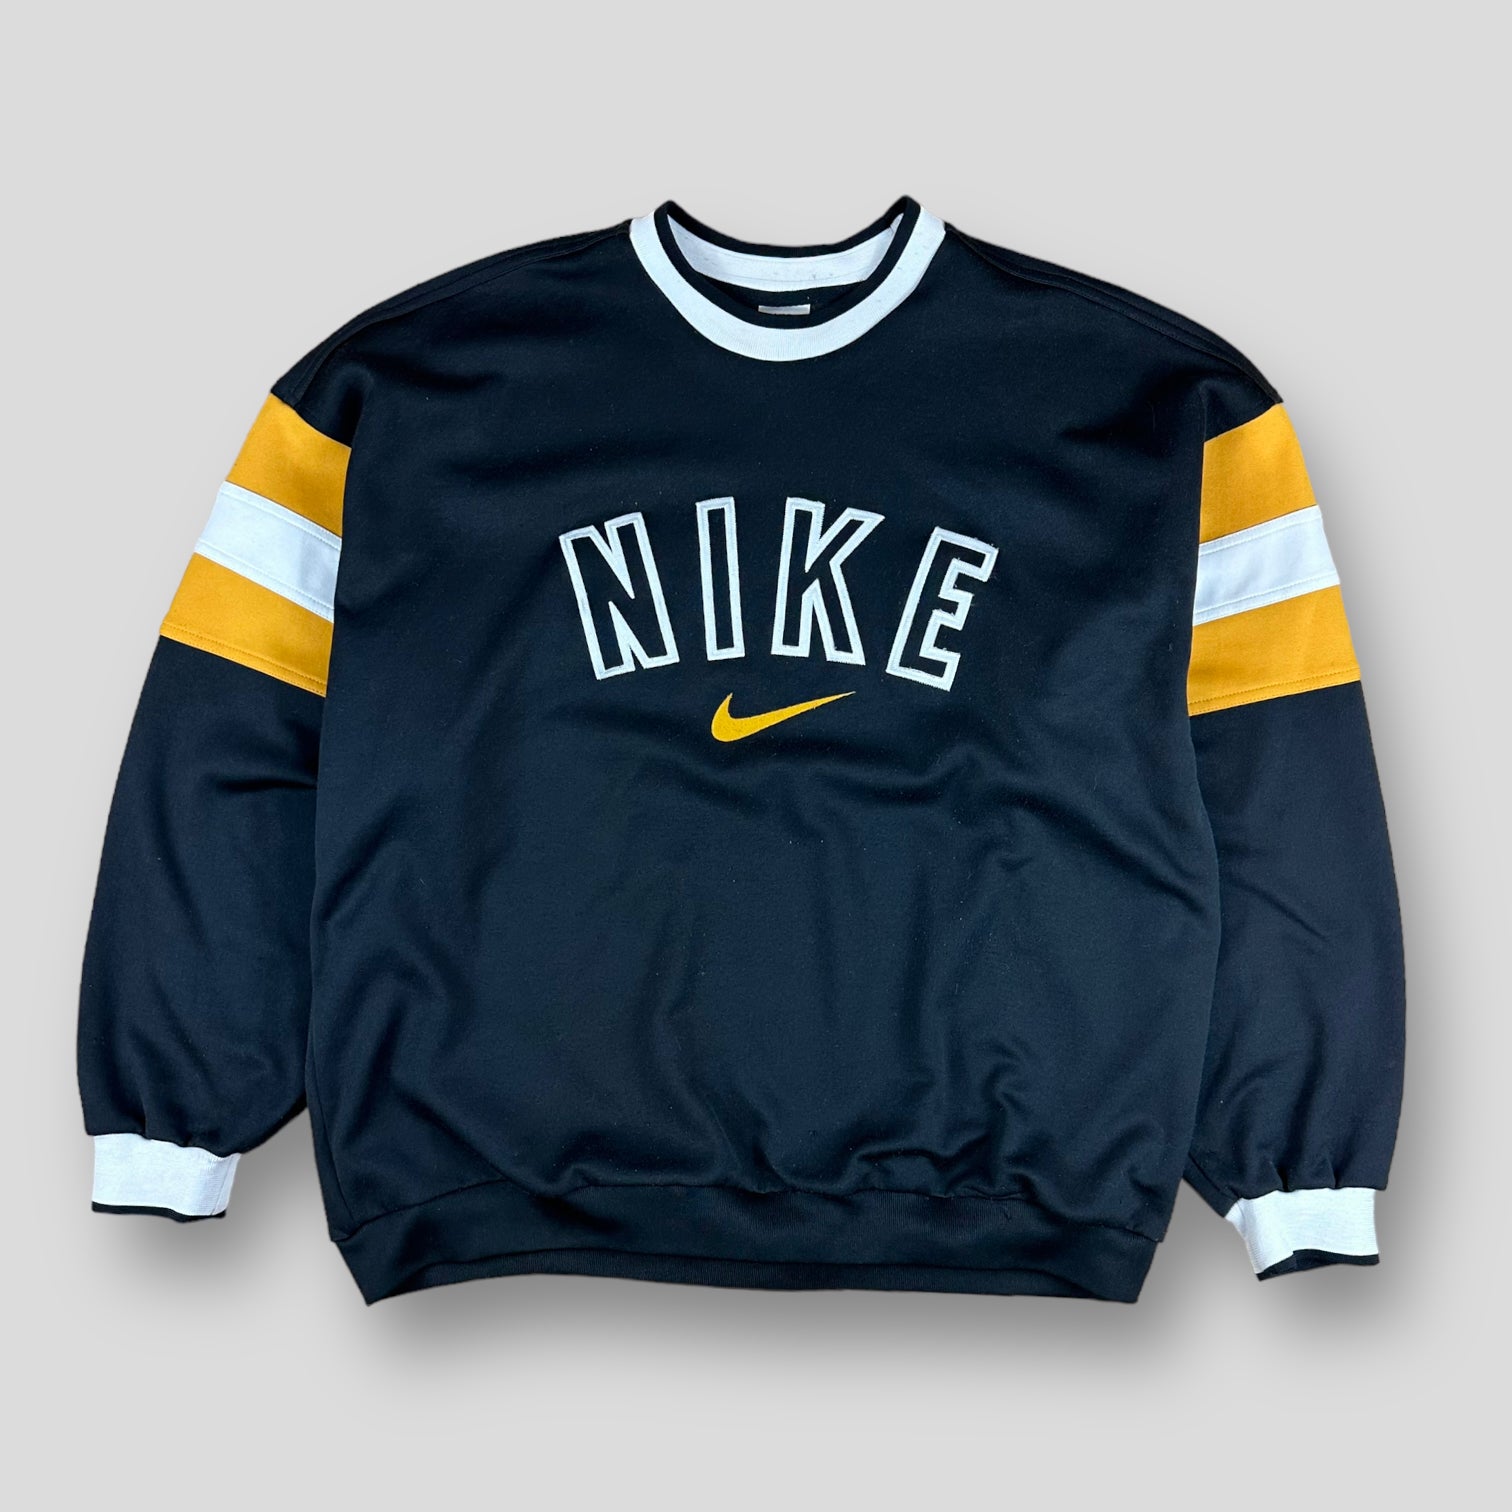 Nike jersey